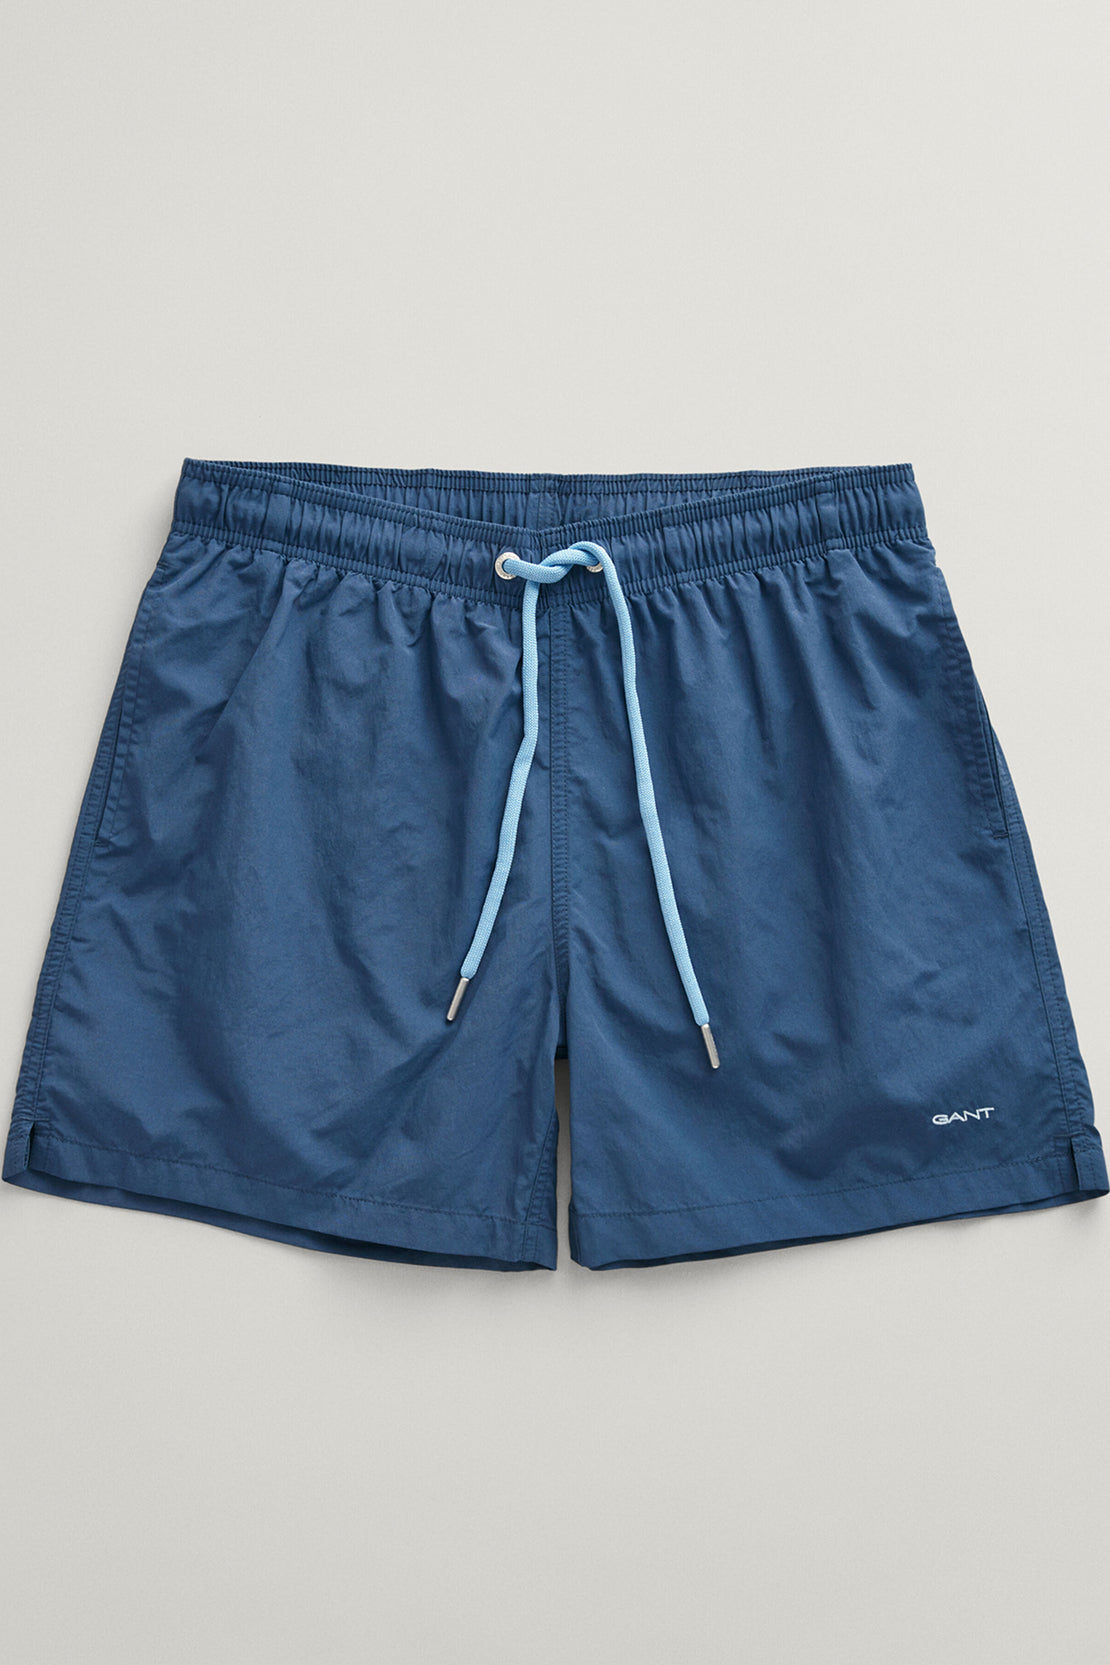 GANT - Swim Shorts in Dusty Blue Sea 920006000 403